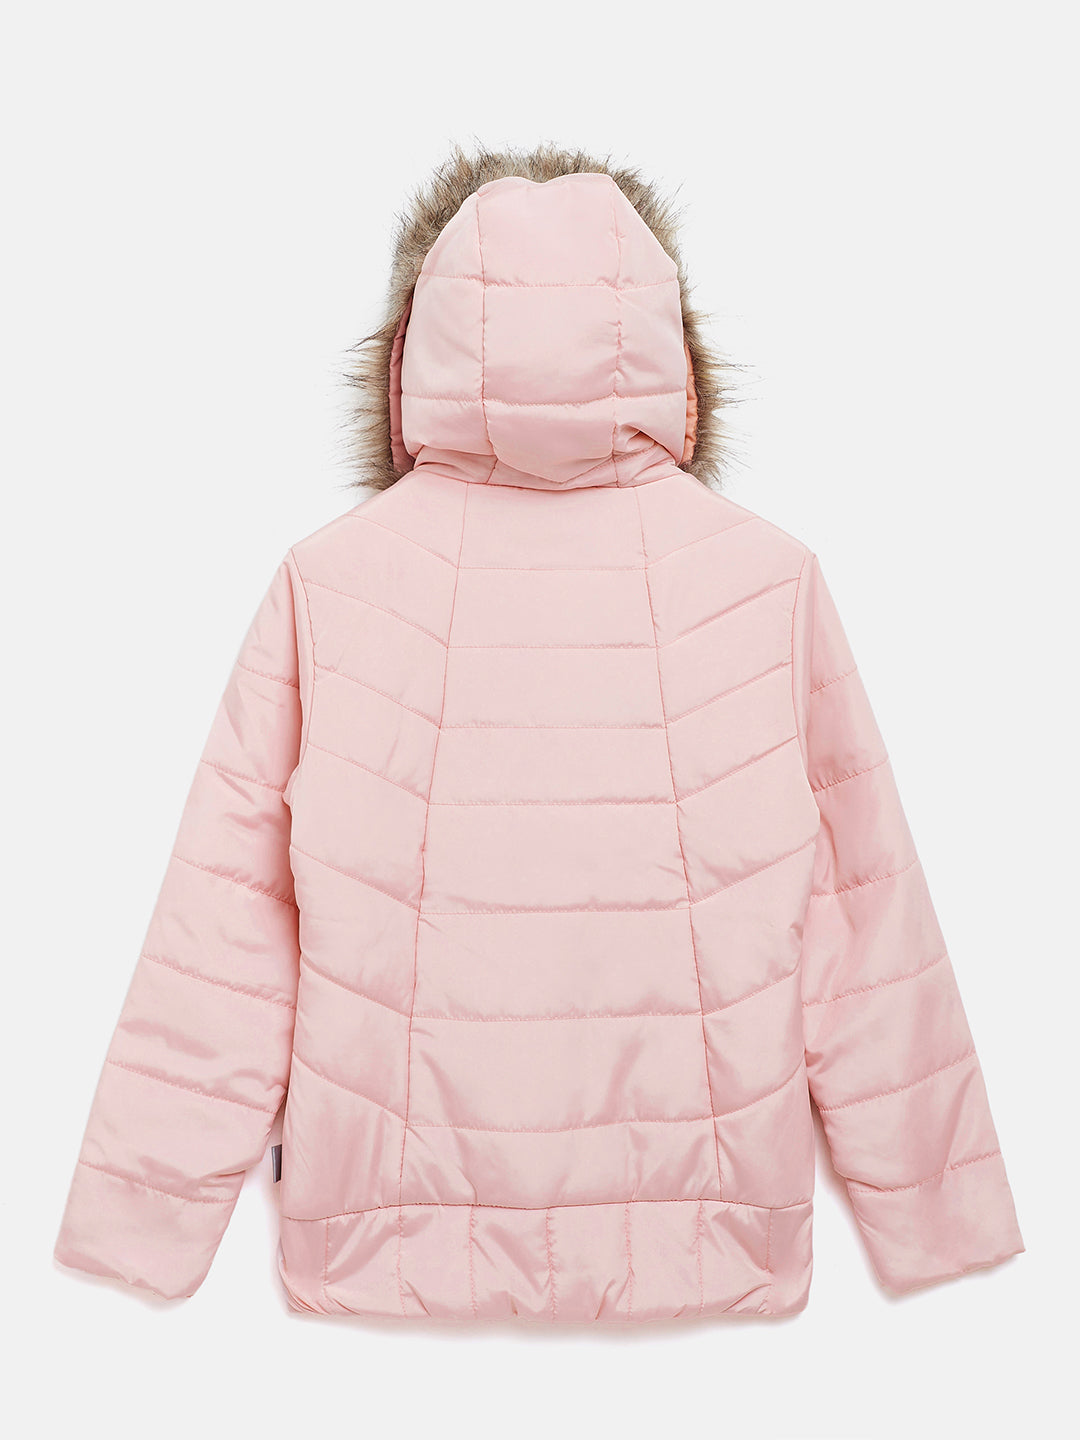 Pink Hooded Jacket - Girls Jackets